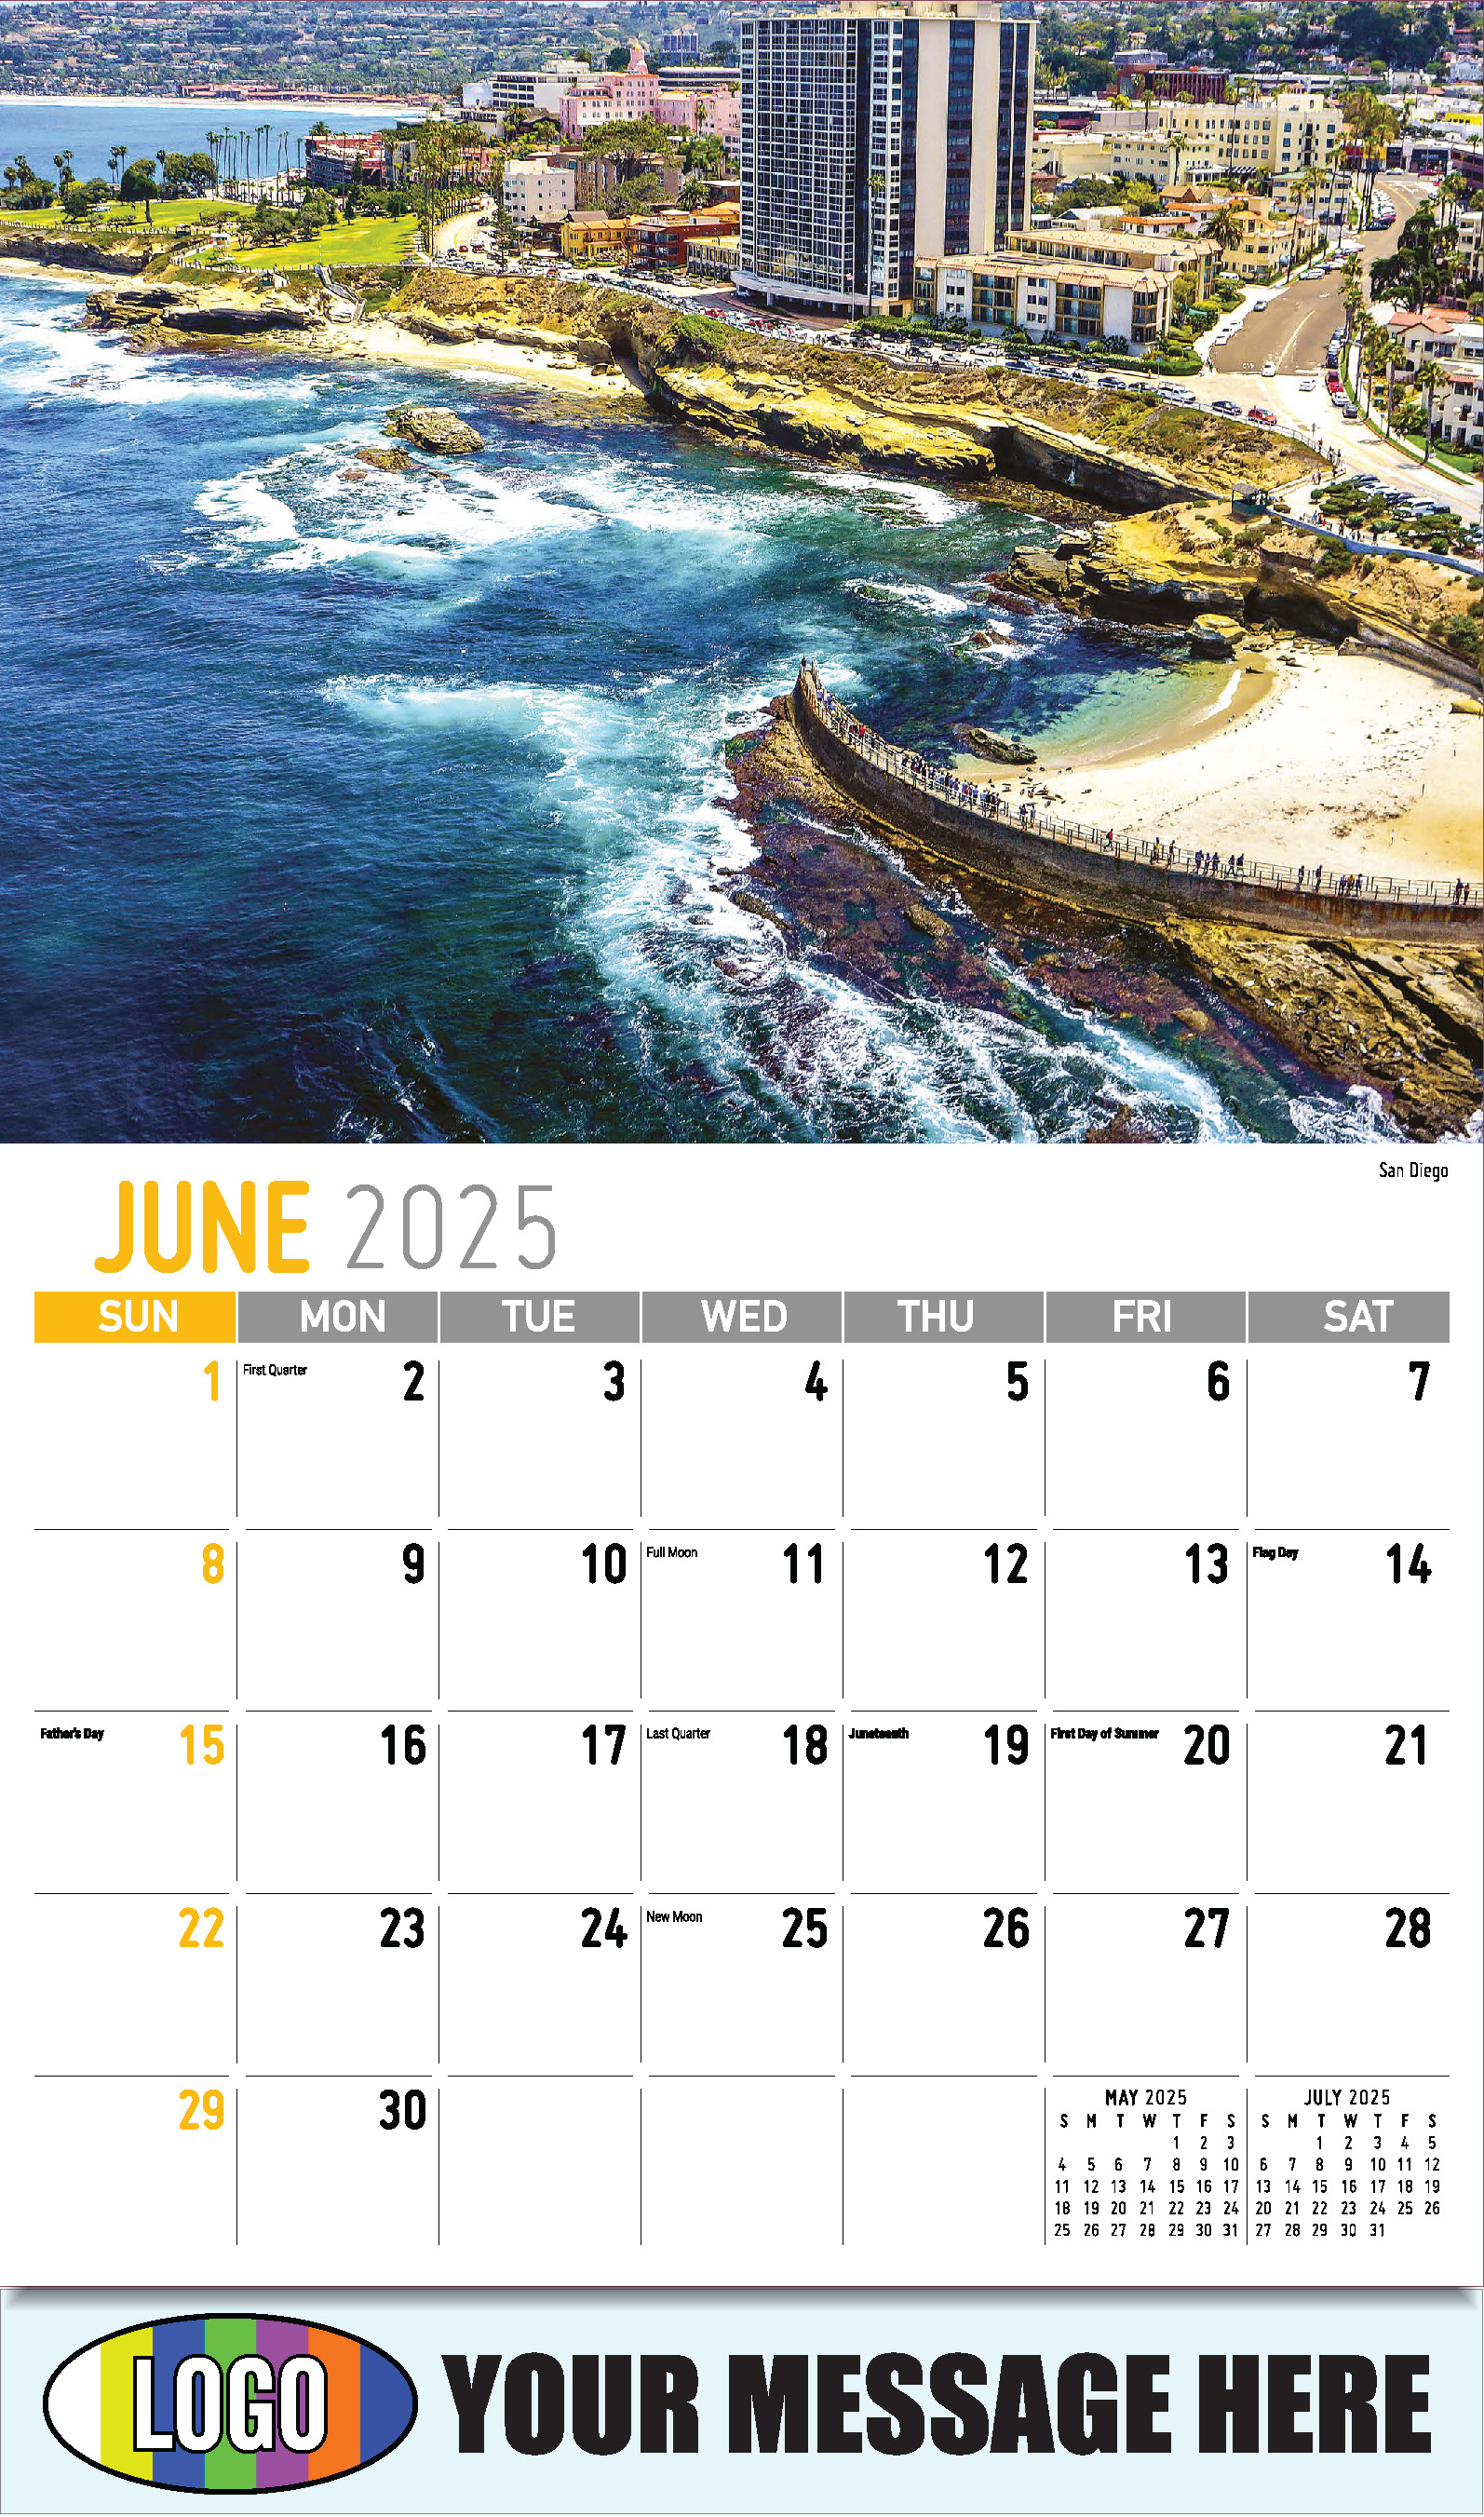 Scenes of California 2025 Business Advertising Wall Calendar - June